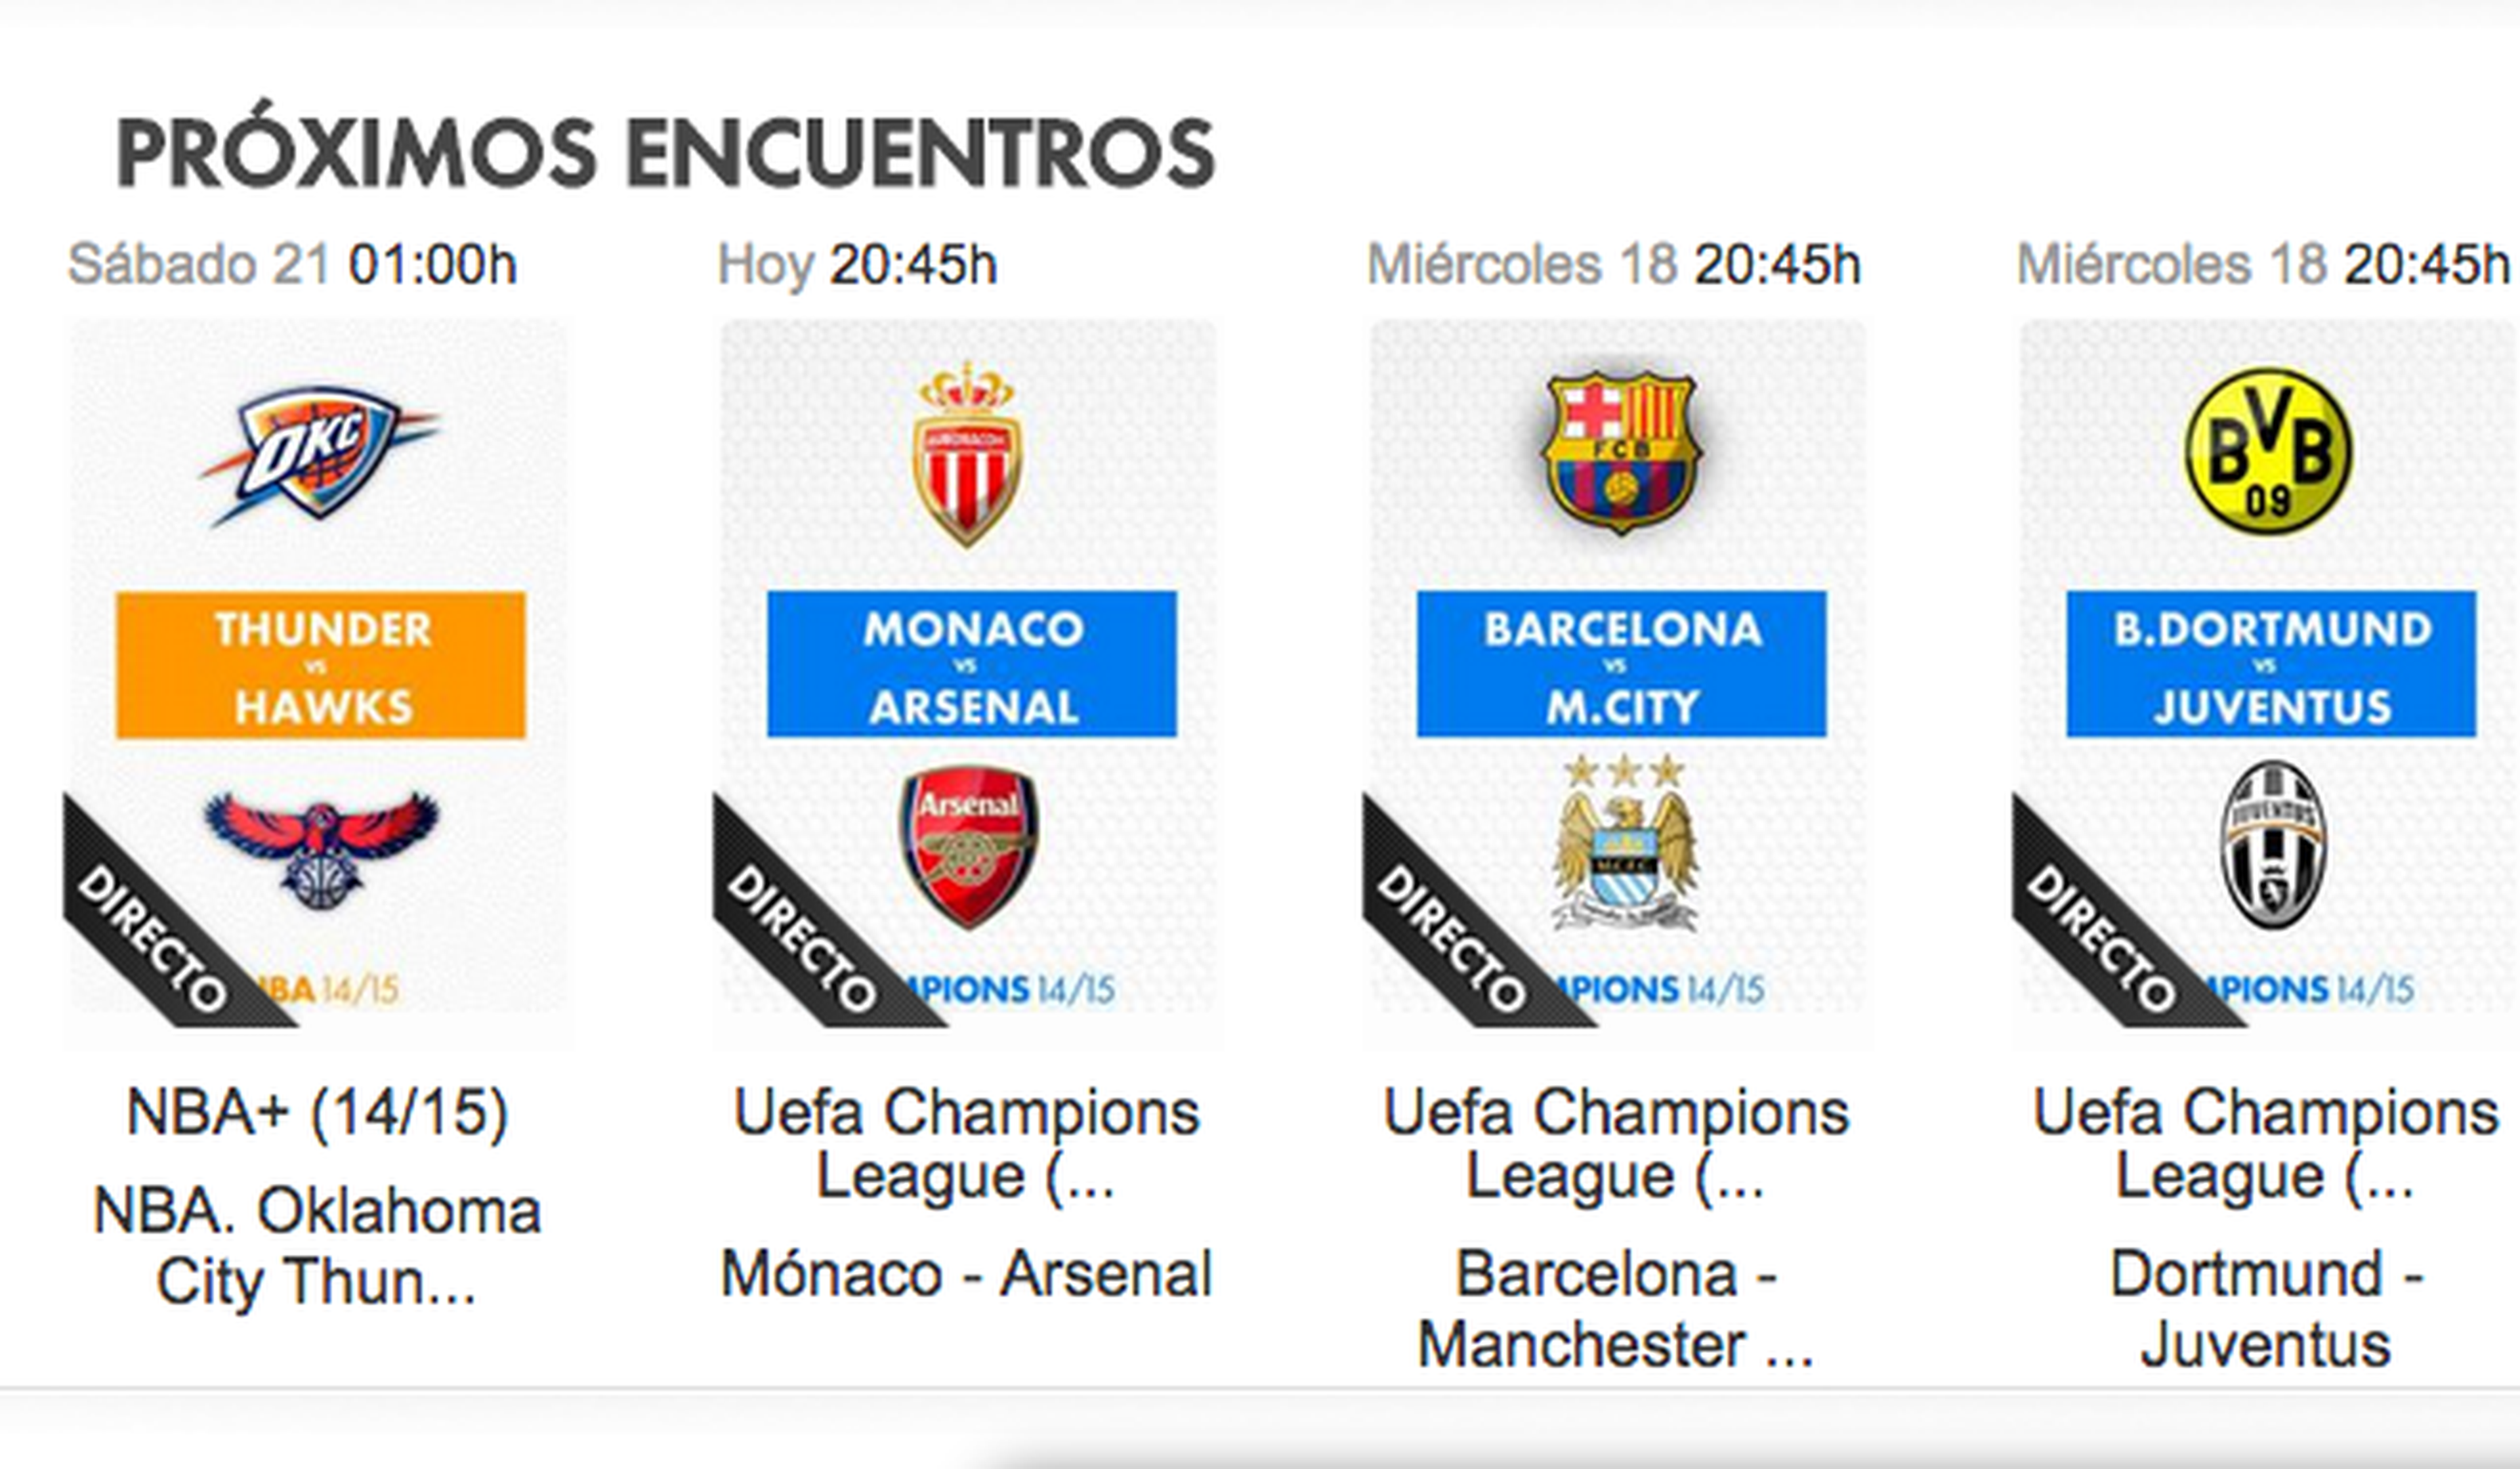 FC Barcelona Manchester City